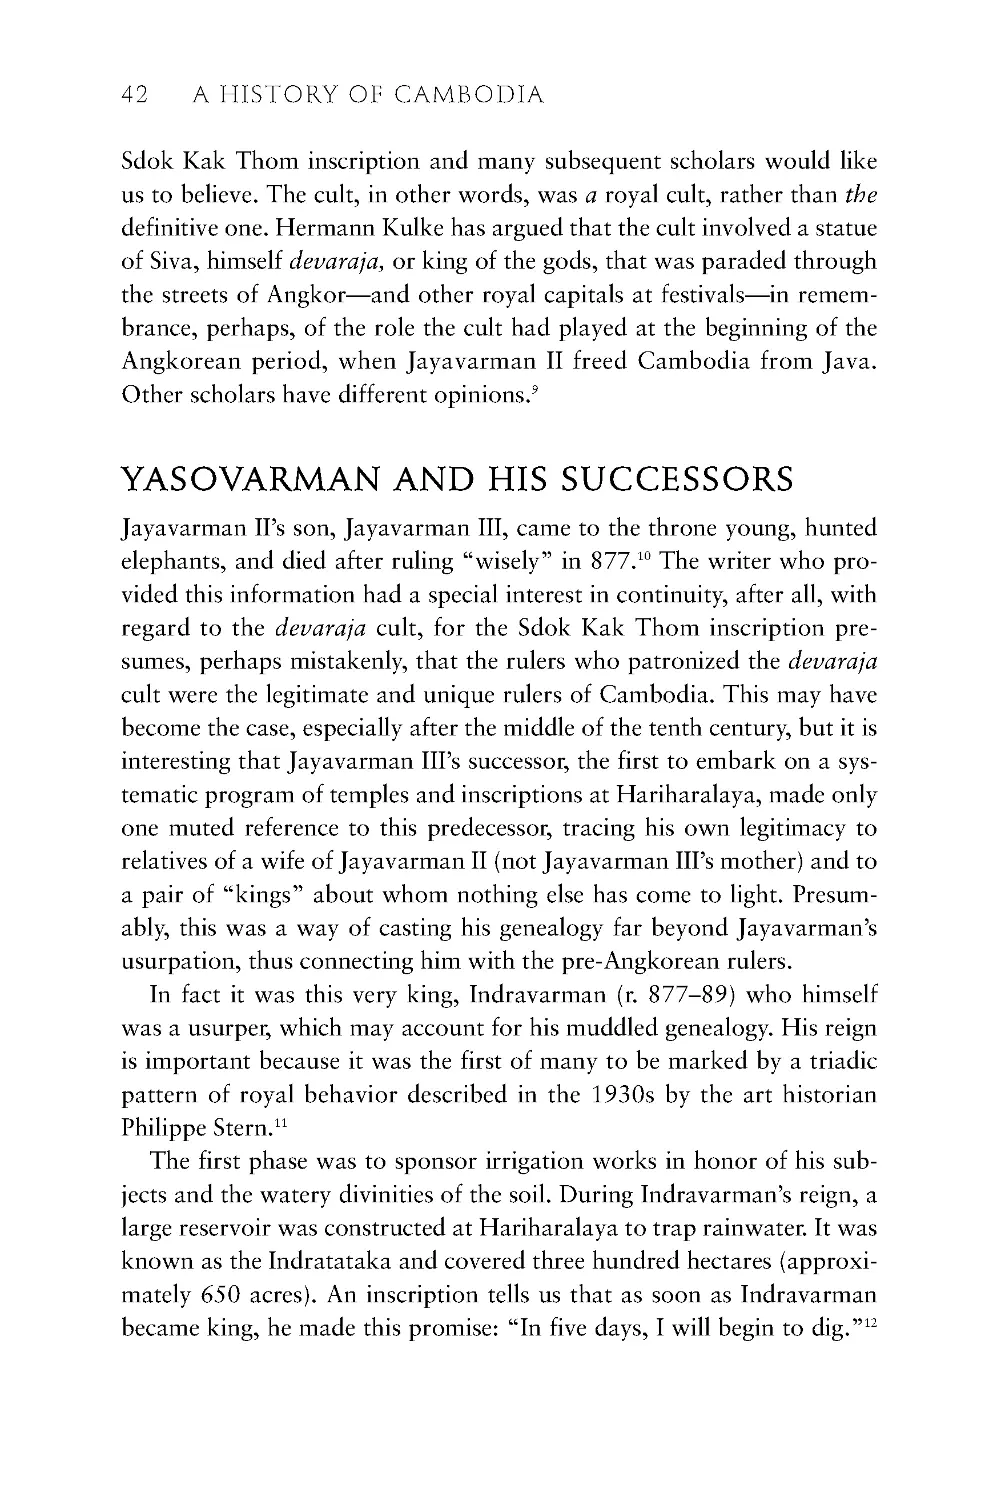 Yasovarman and His Successors